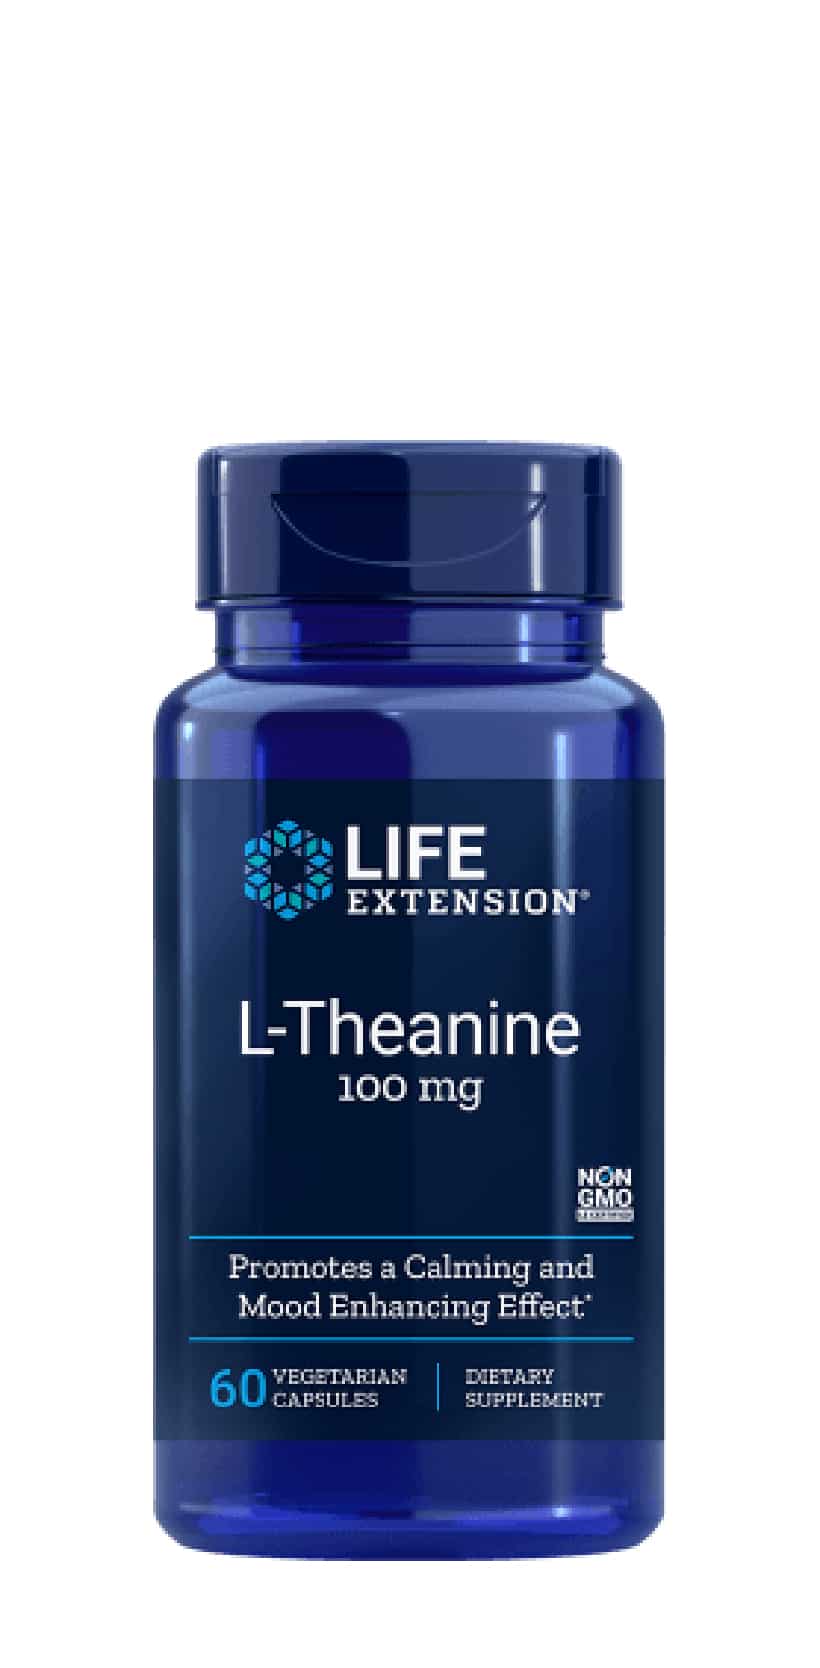 L-theanine 100 mg